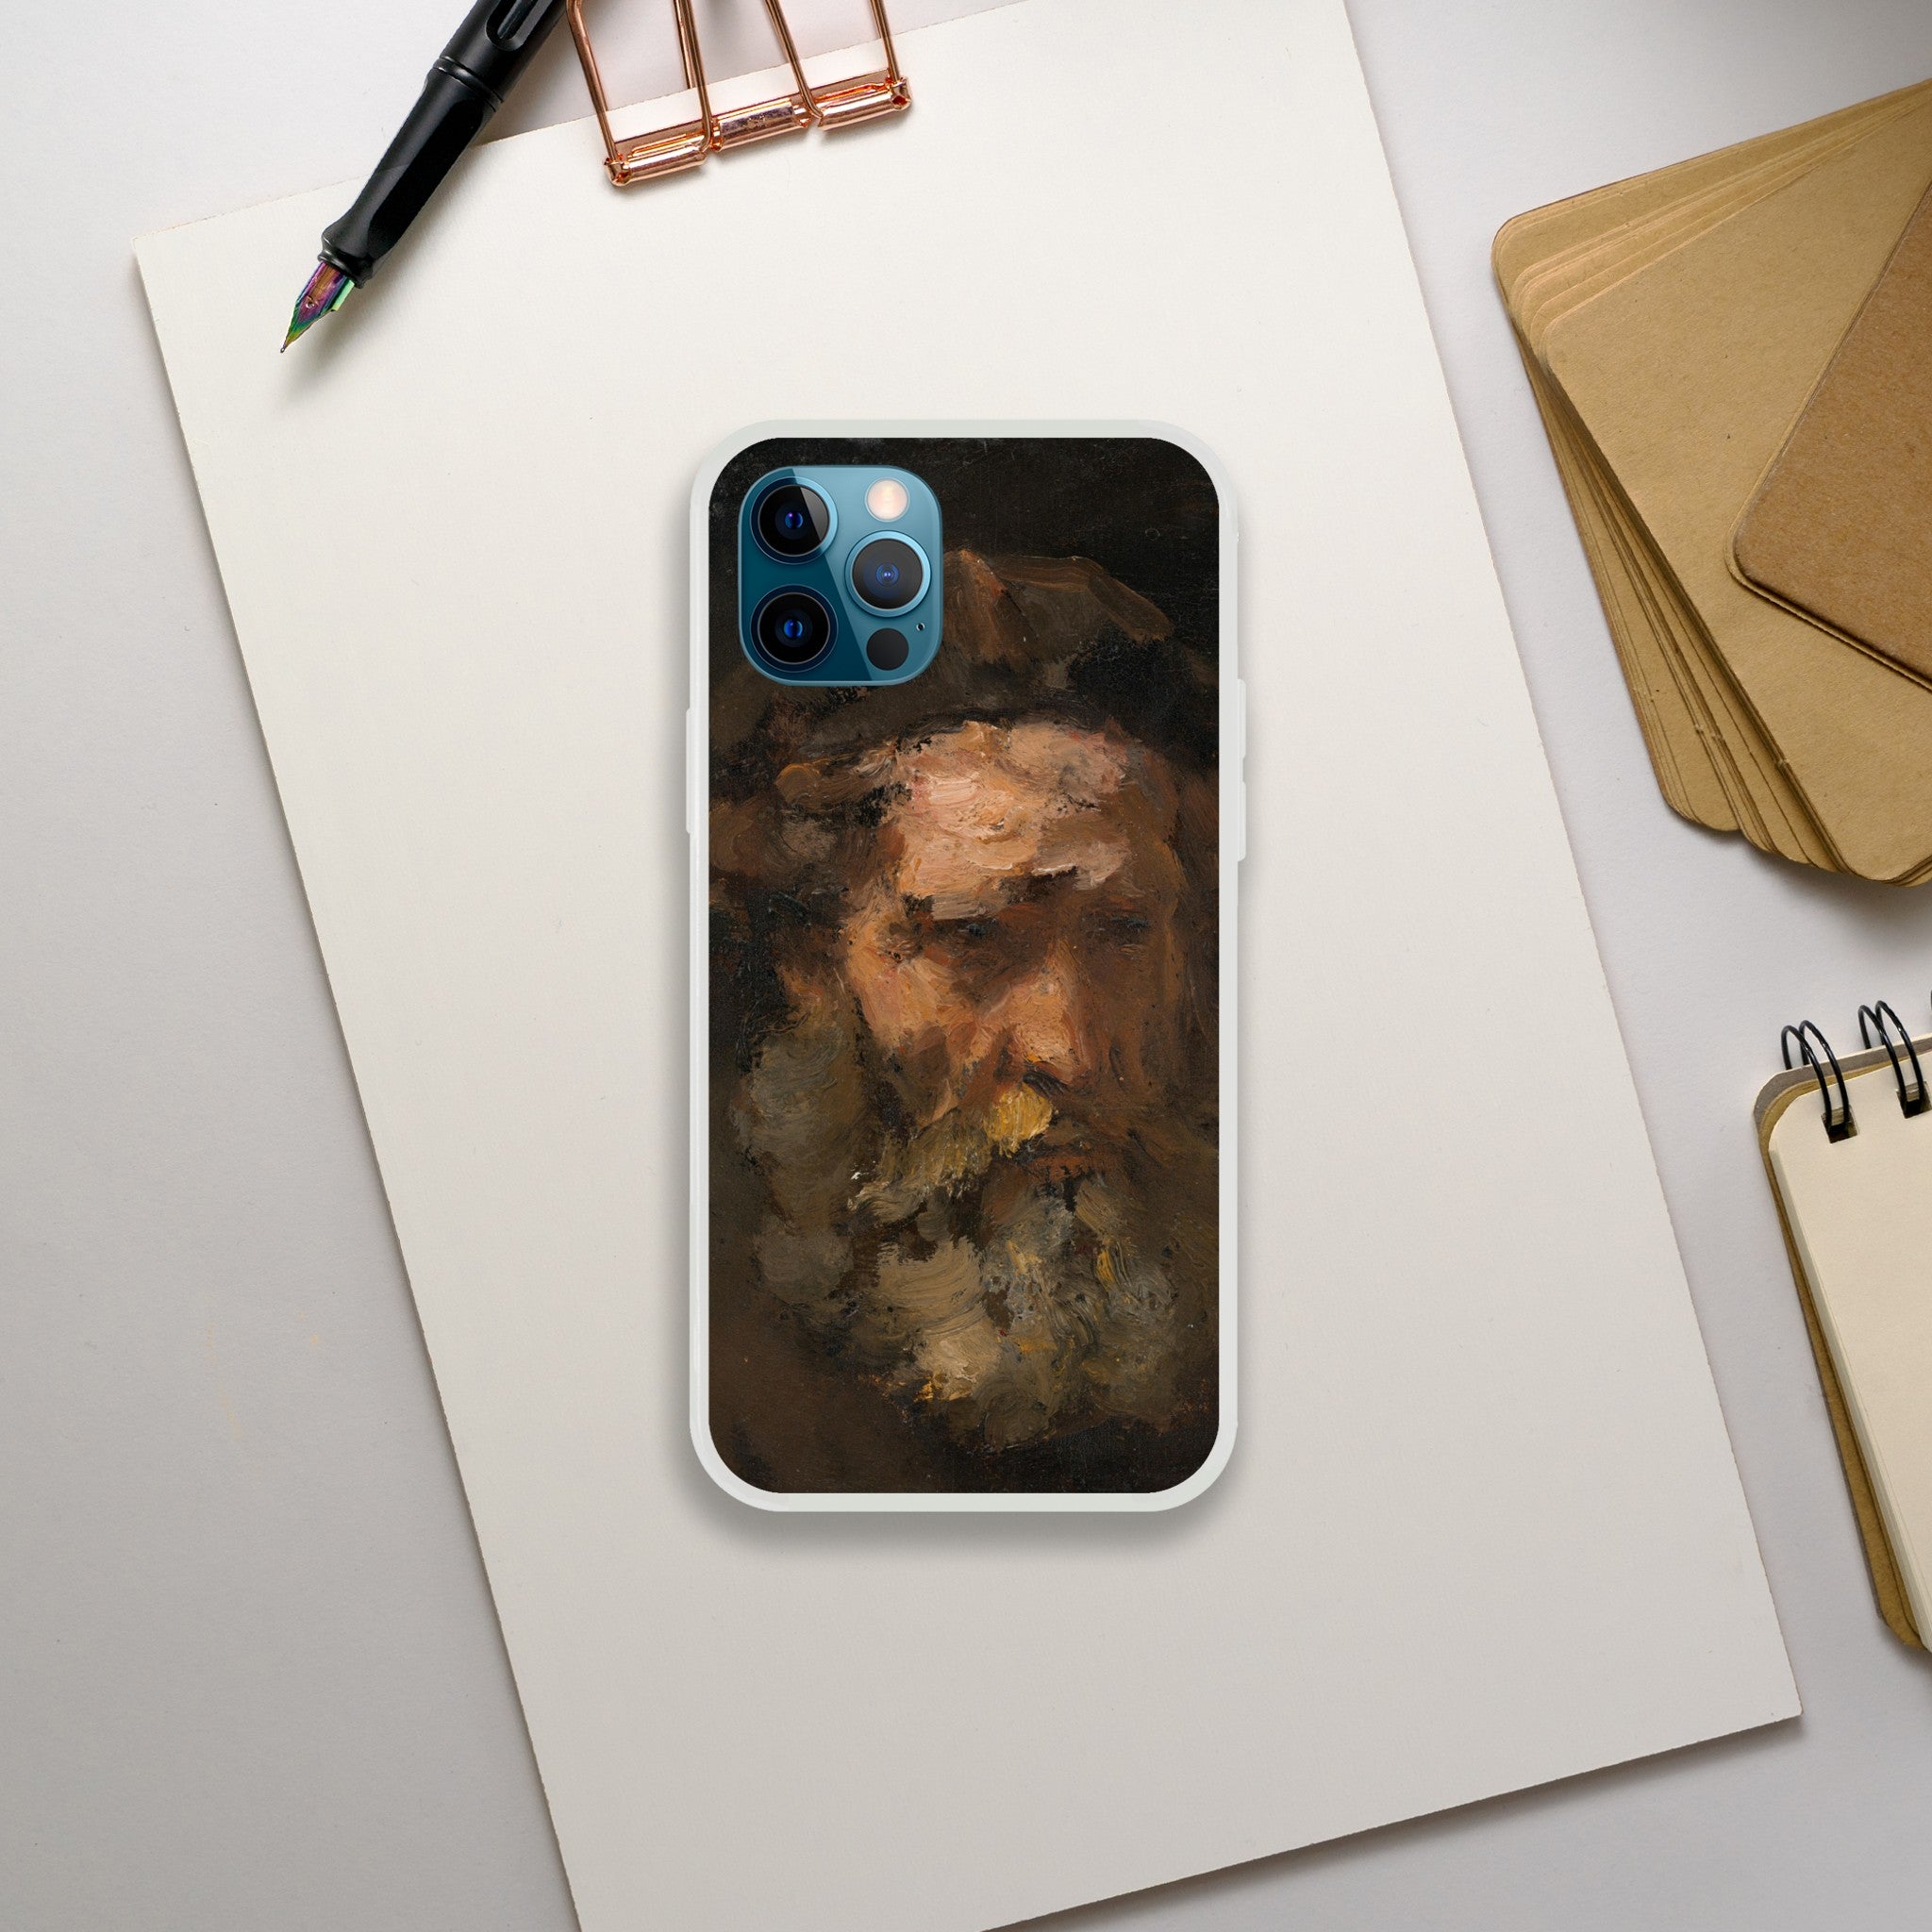 Painted Man I-phone Case